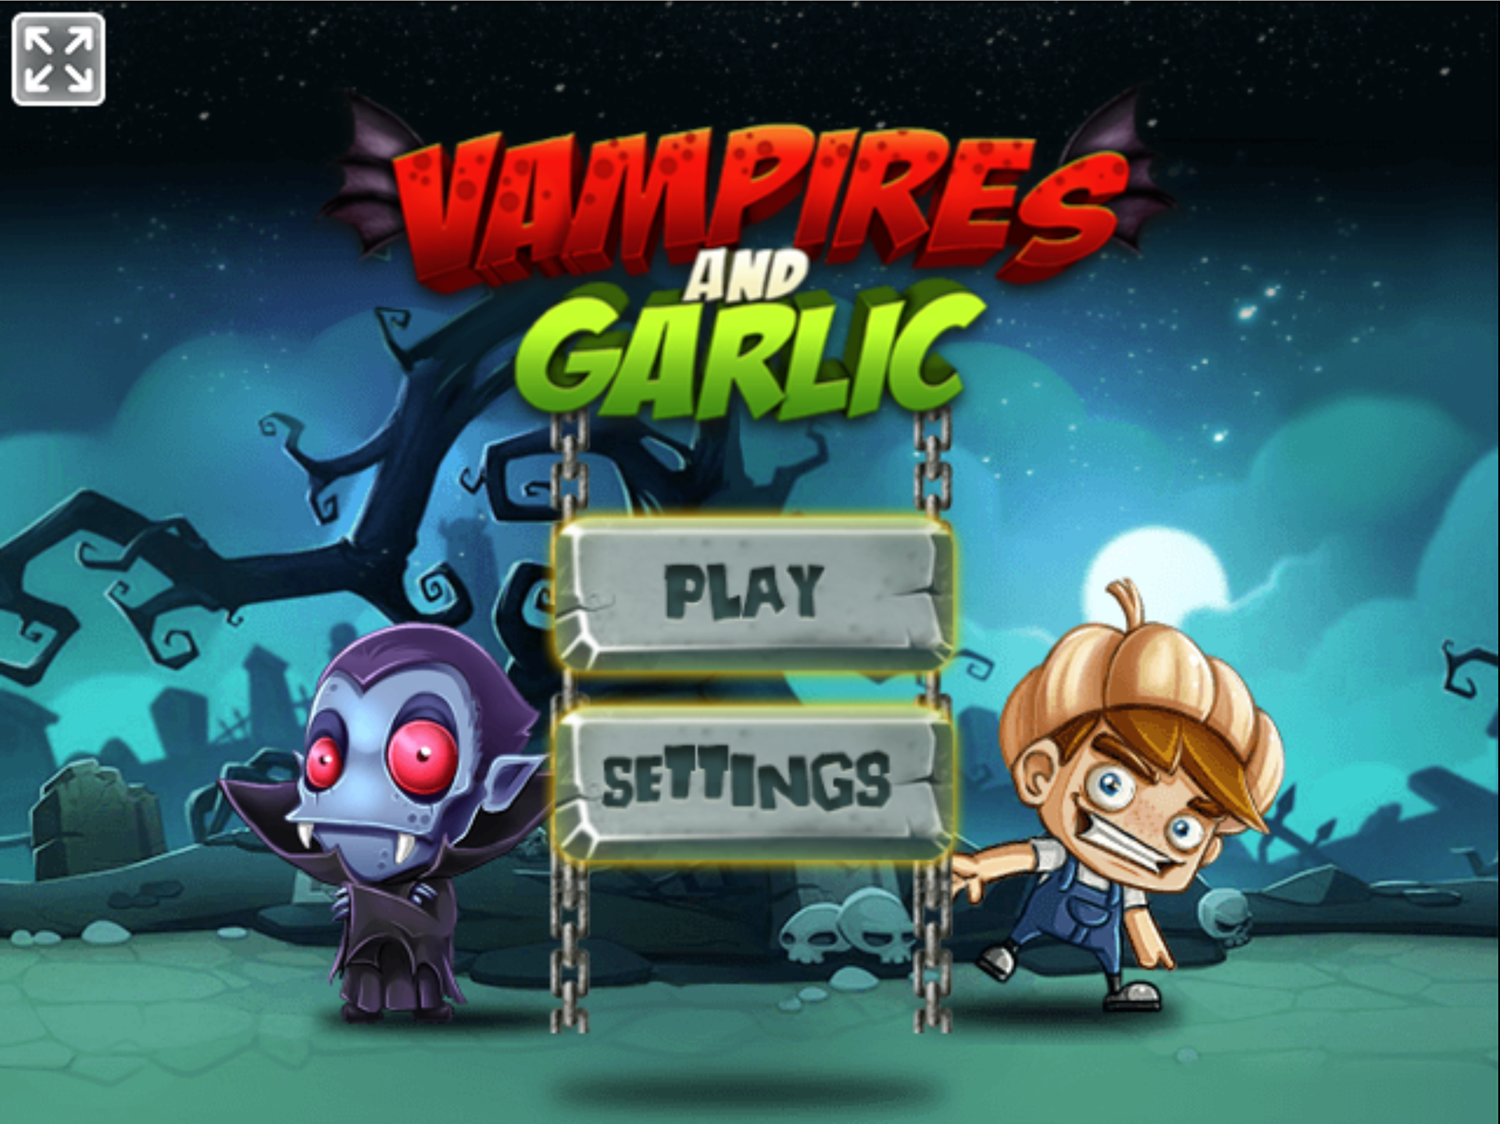 Vampires And Garlic Game Welcome Screen Screenshot.